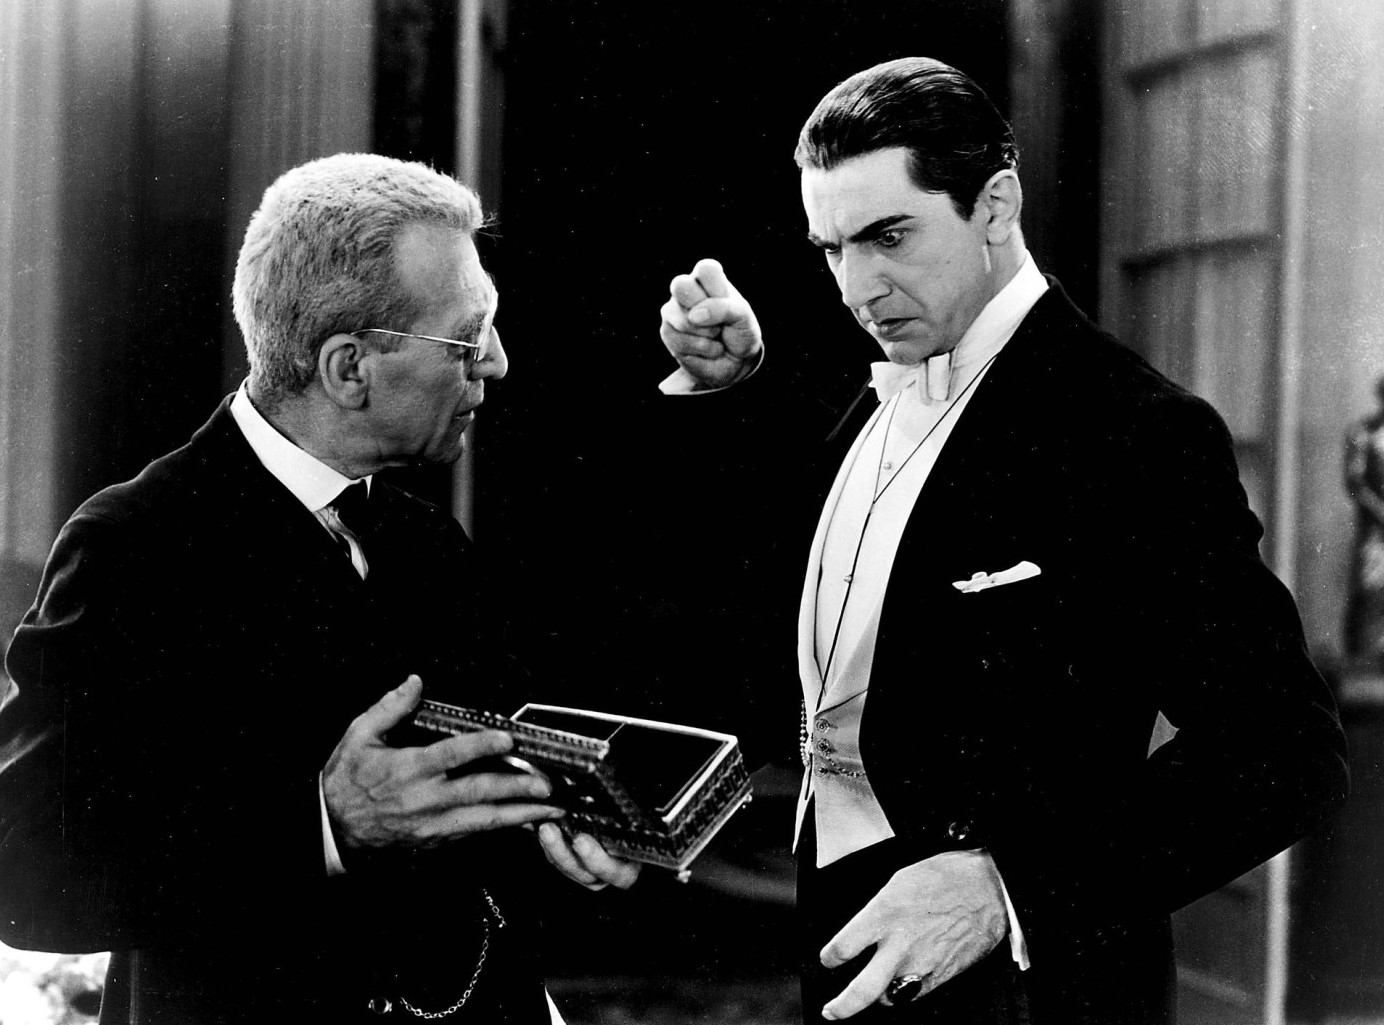 Van Helsing confronting Dracula